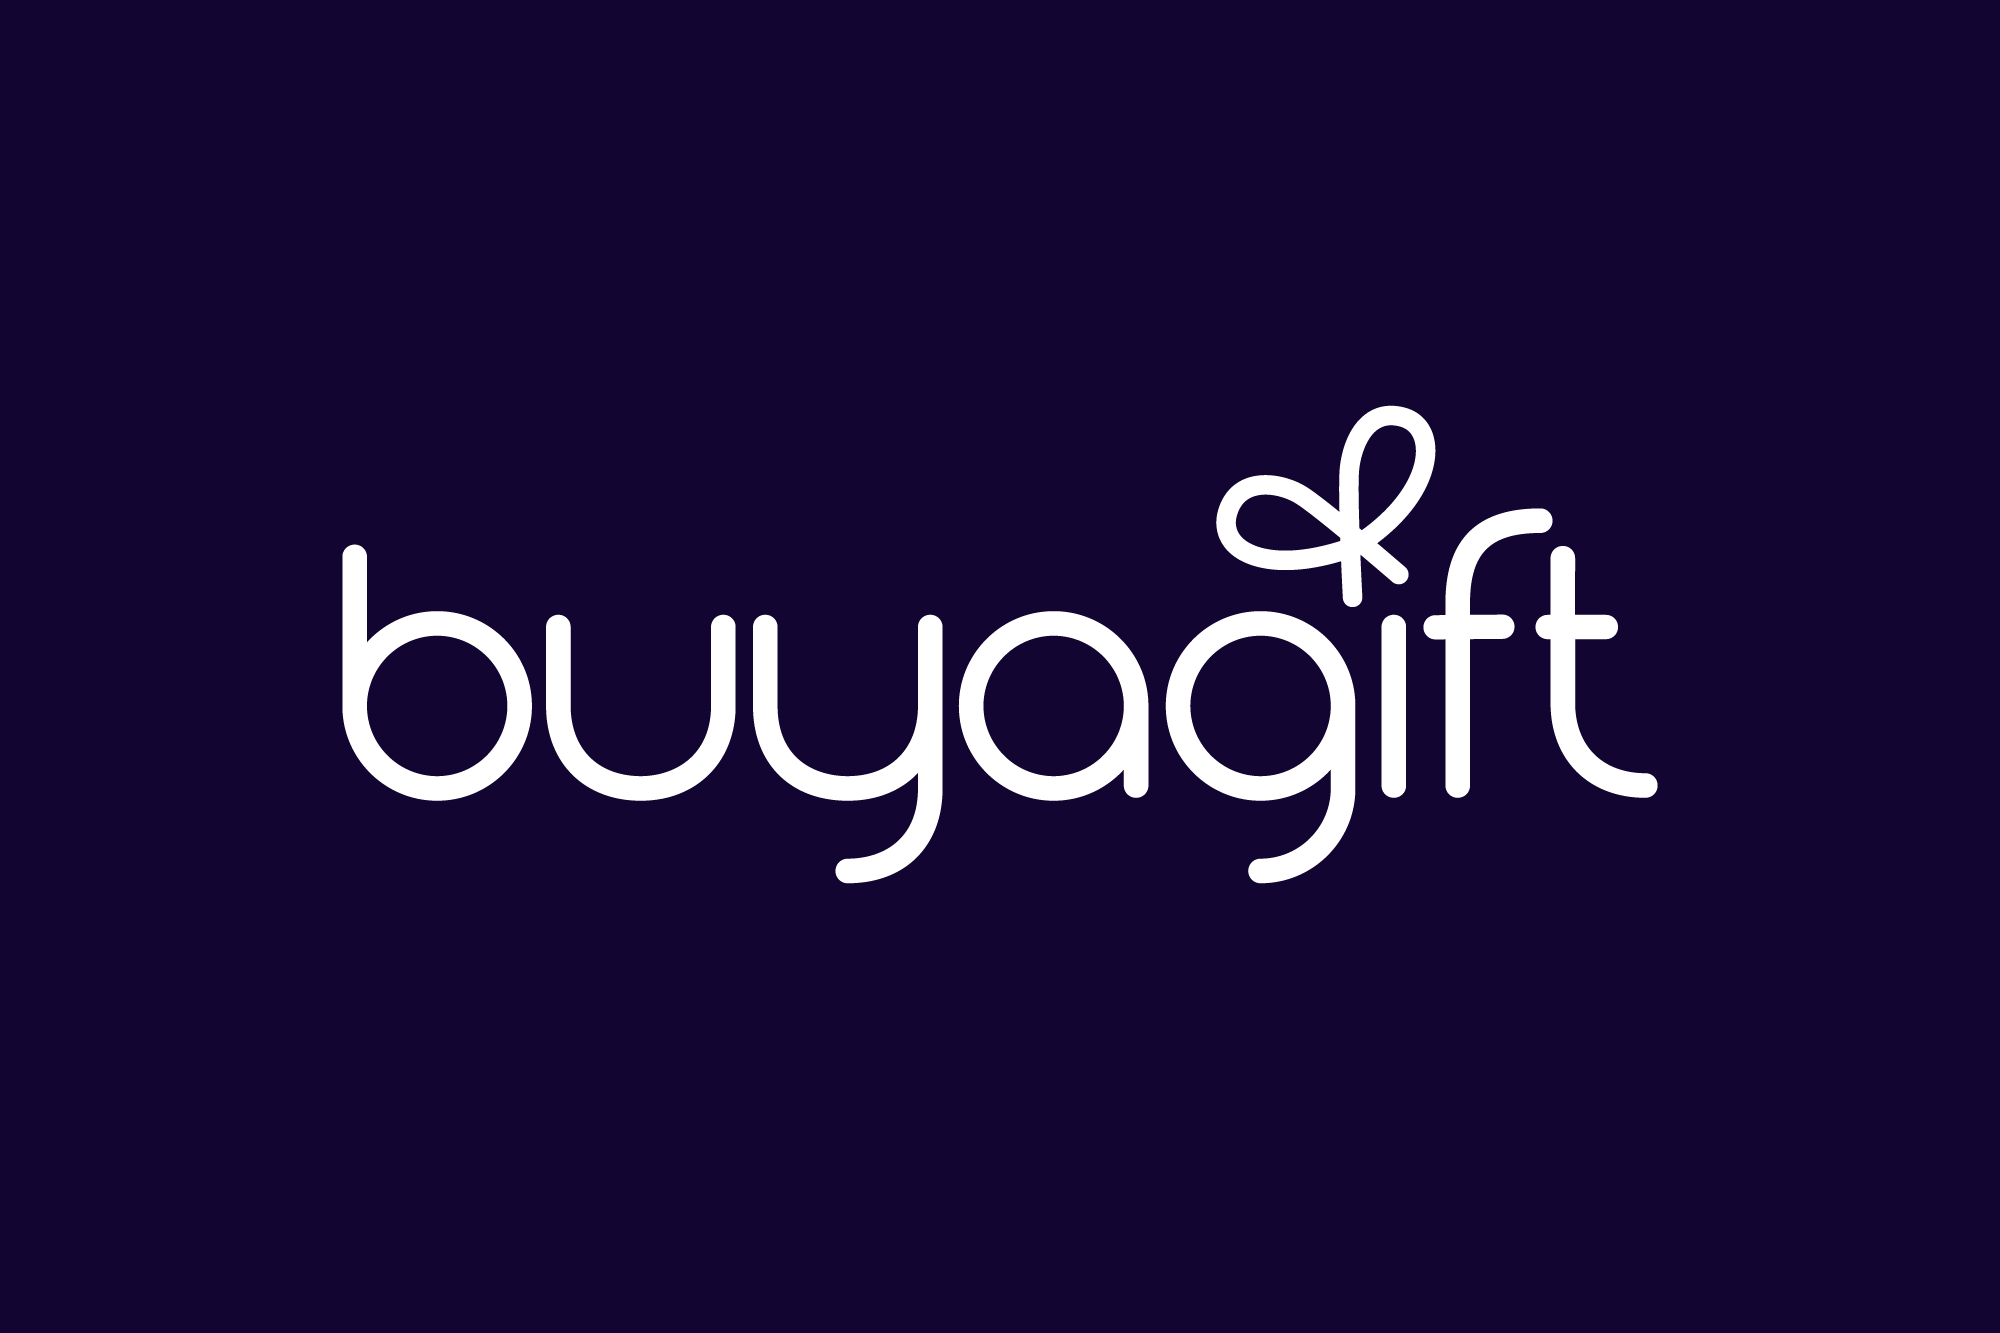 Buy a Gift Logo - White on Midnight Blue